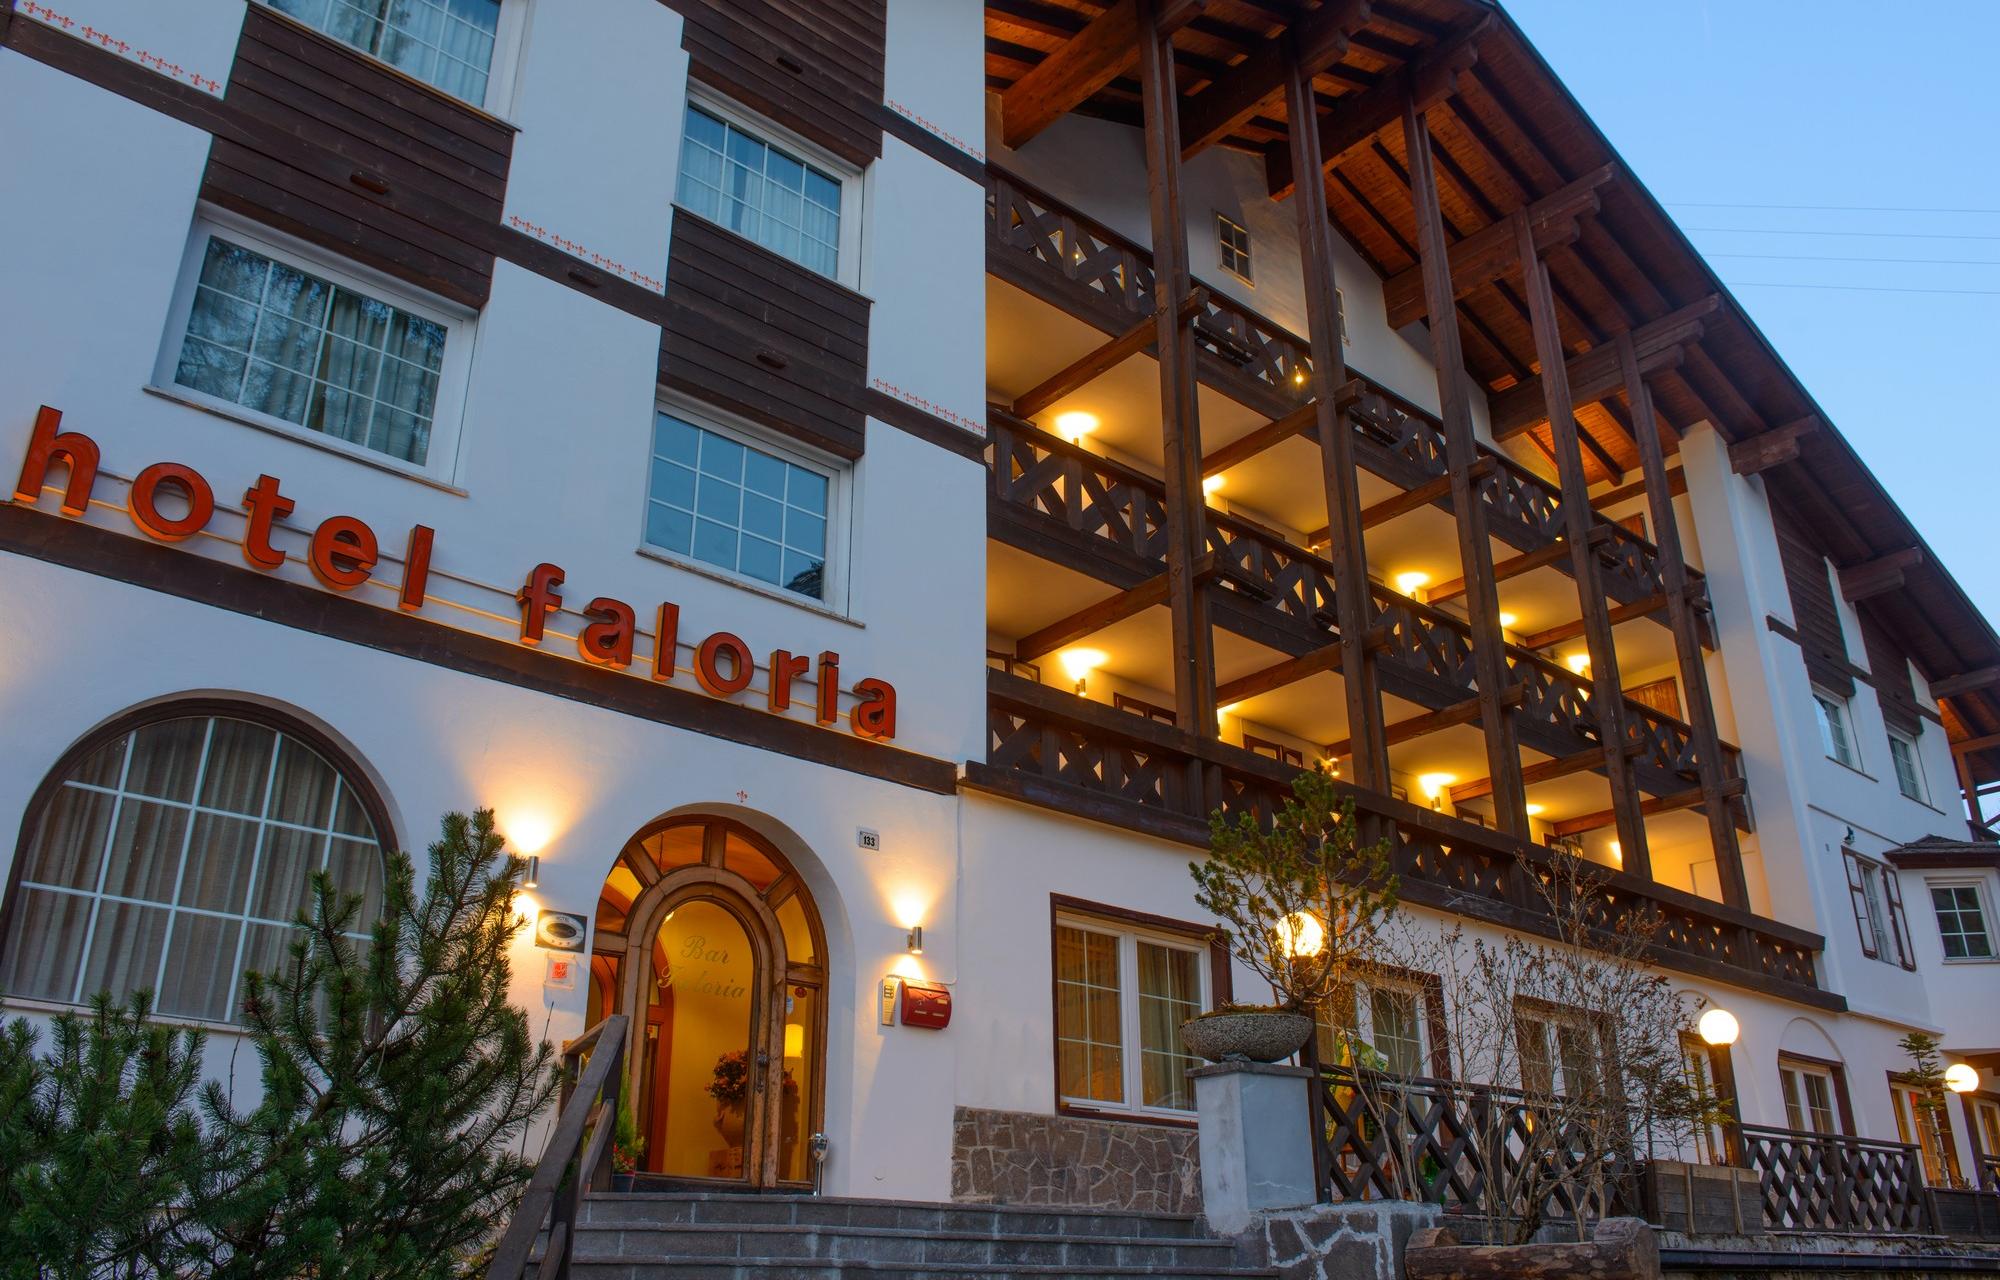 Hotel Park Hotel Faloria